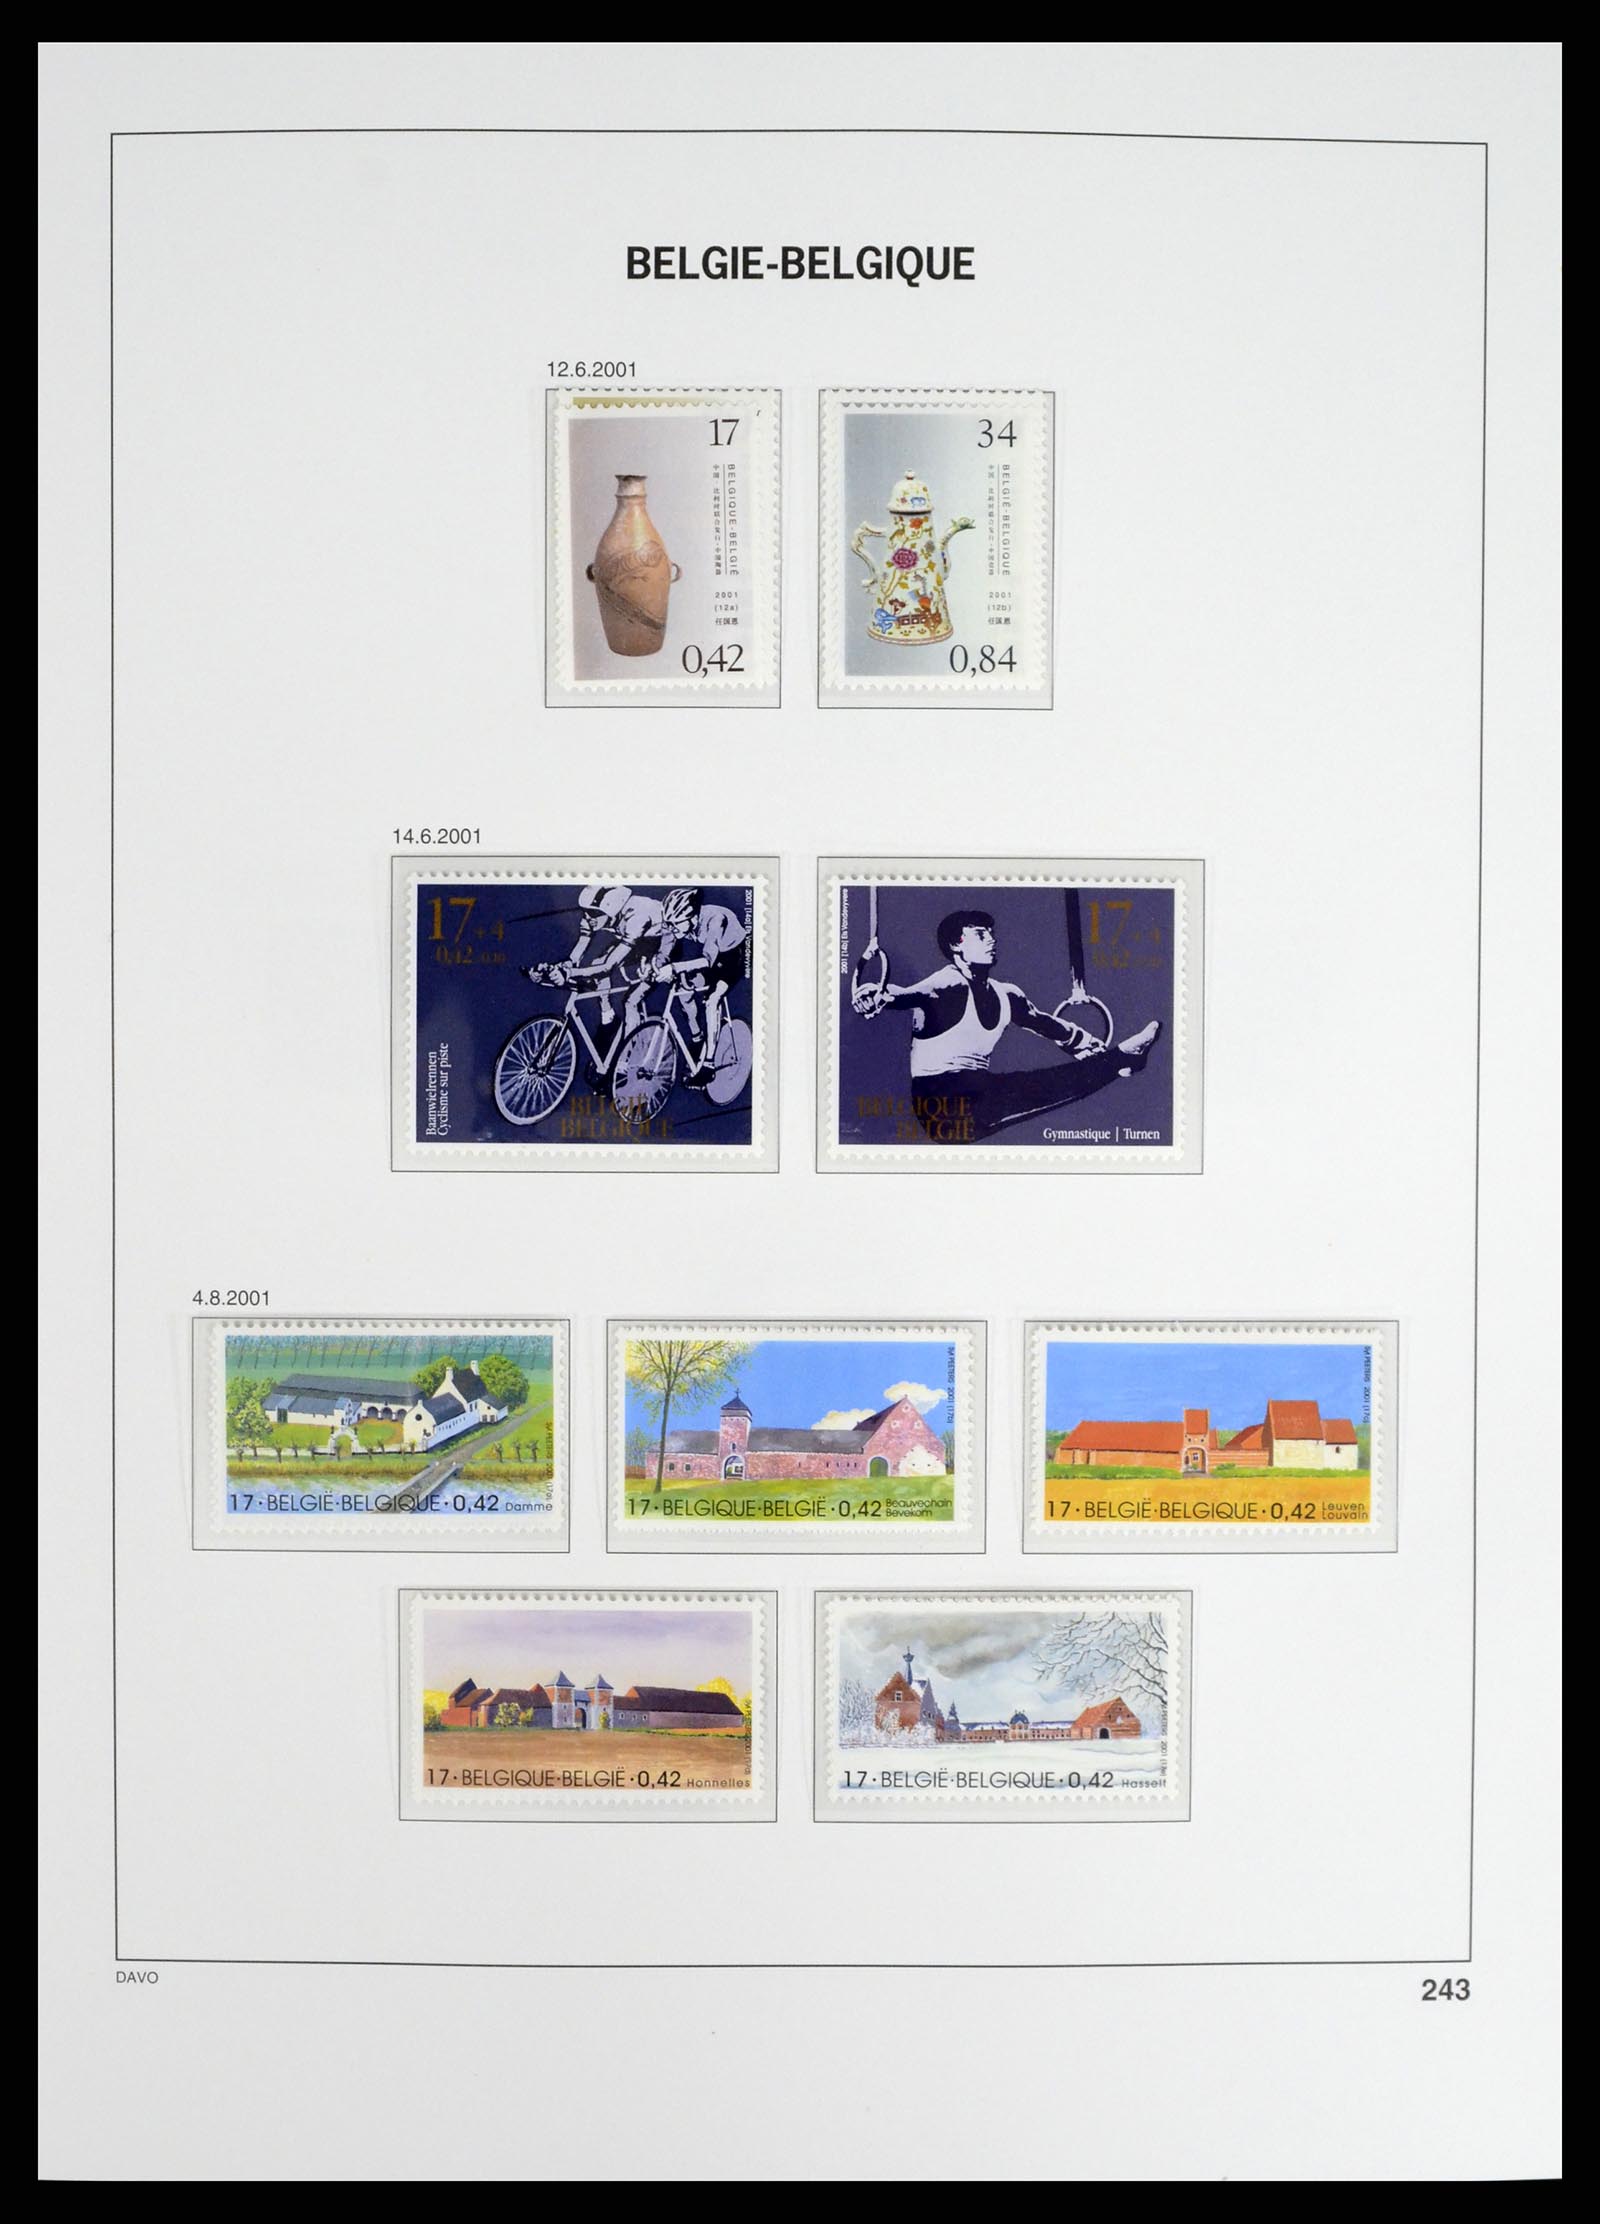 37368 178 - Stamp collection 37368 Belgium 1969-2003.